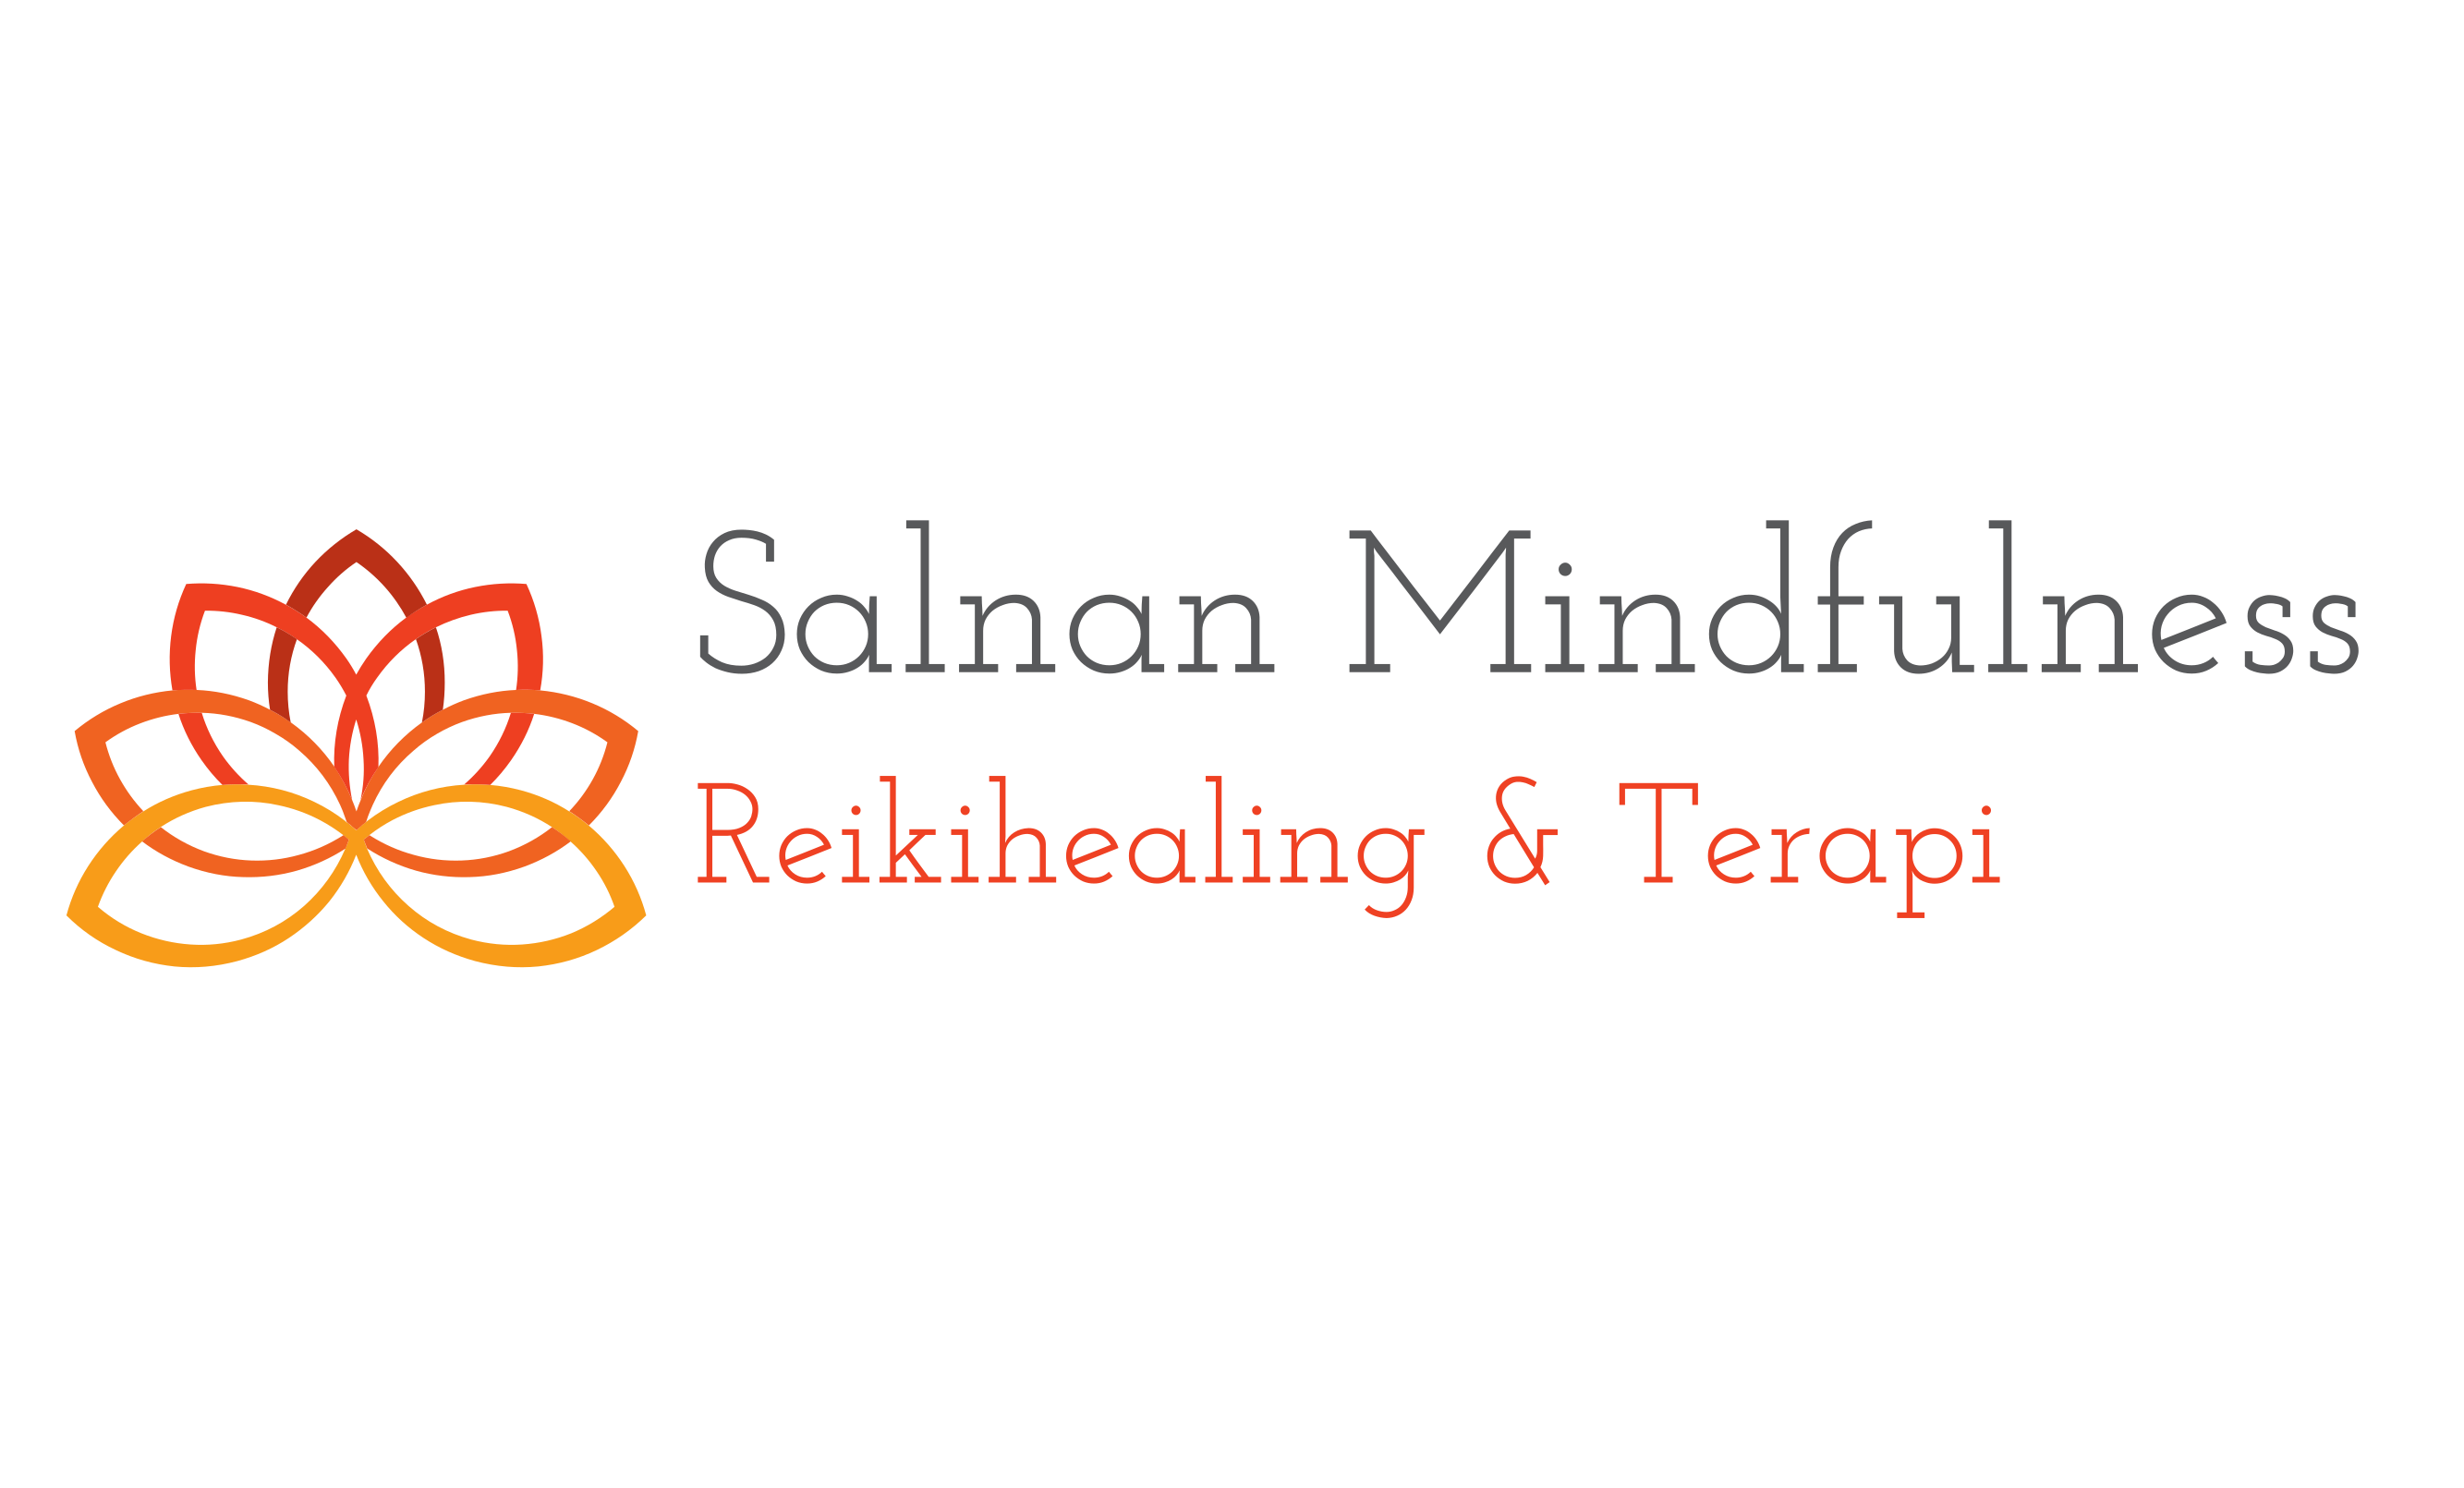 Salnan Mindfulness